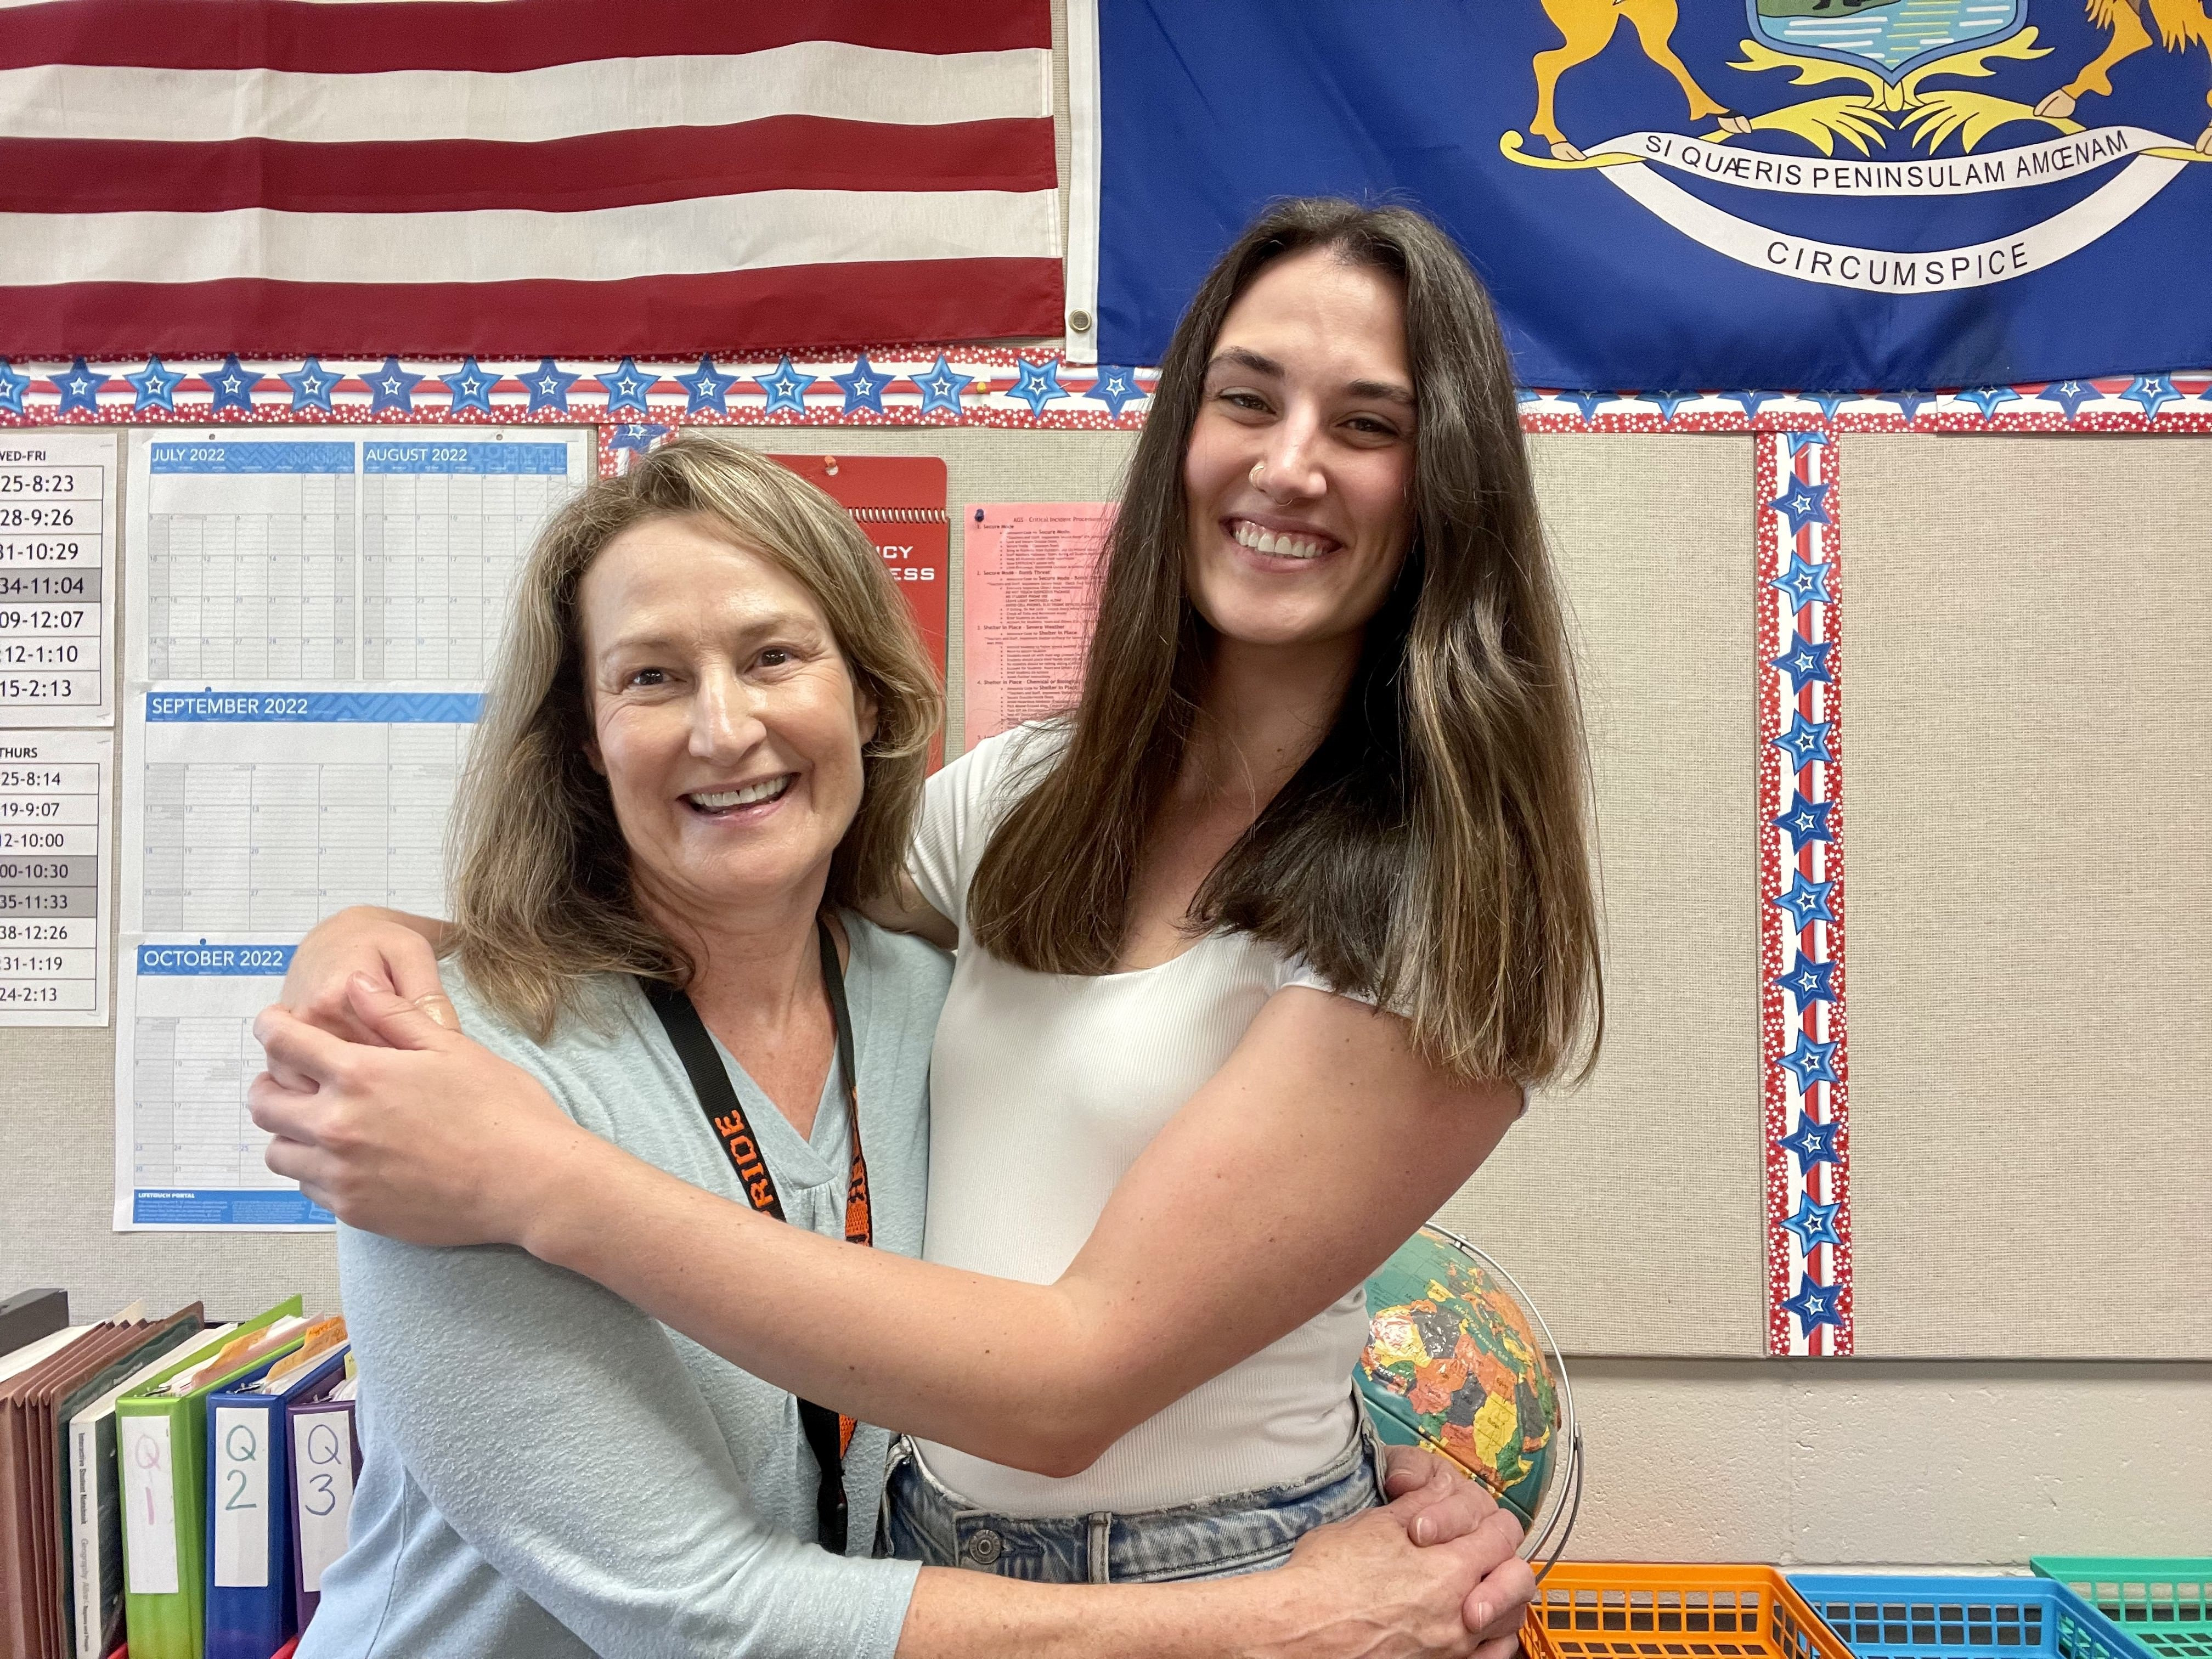 Two white women hugging each other sideways in a school classroom.